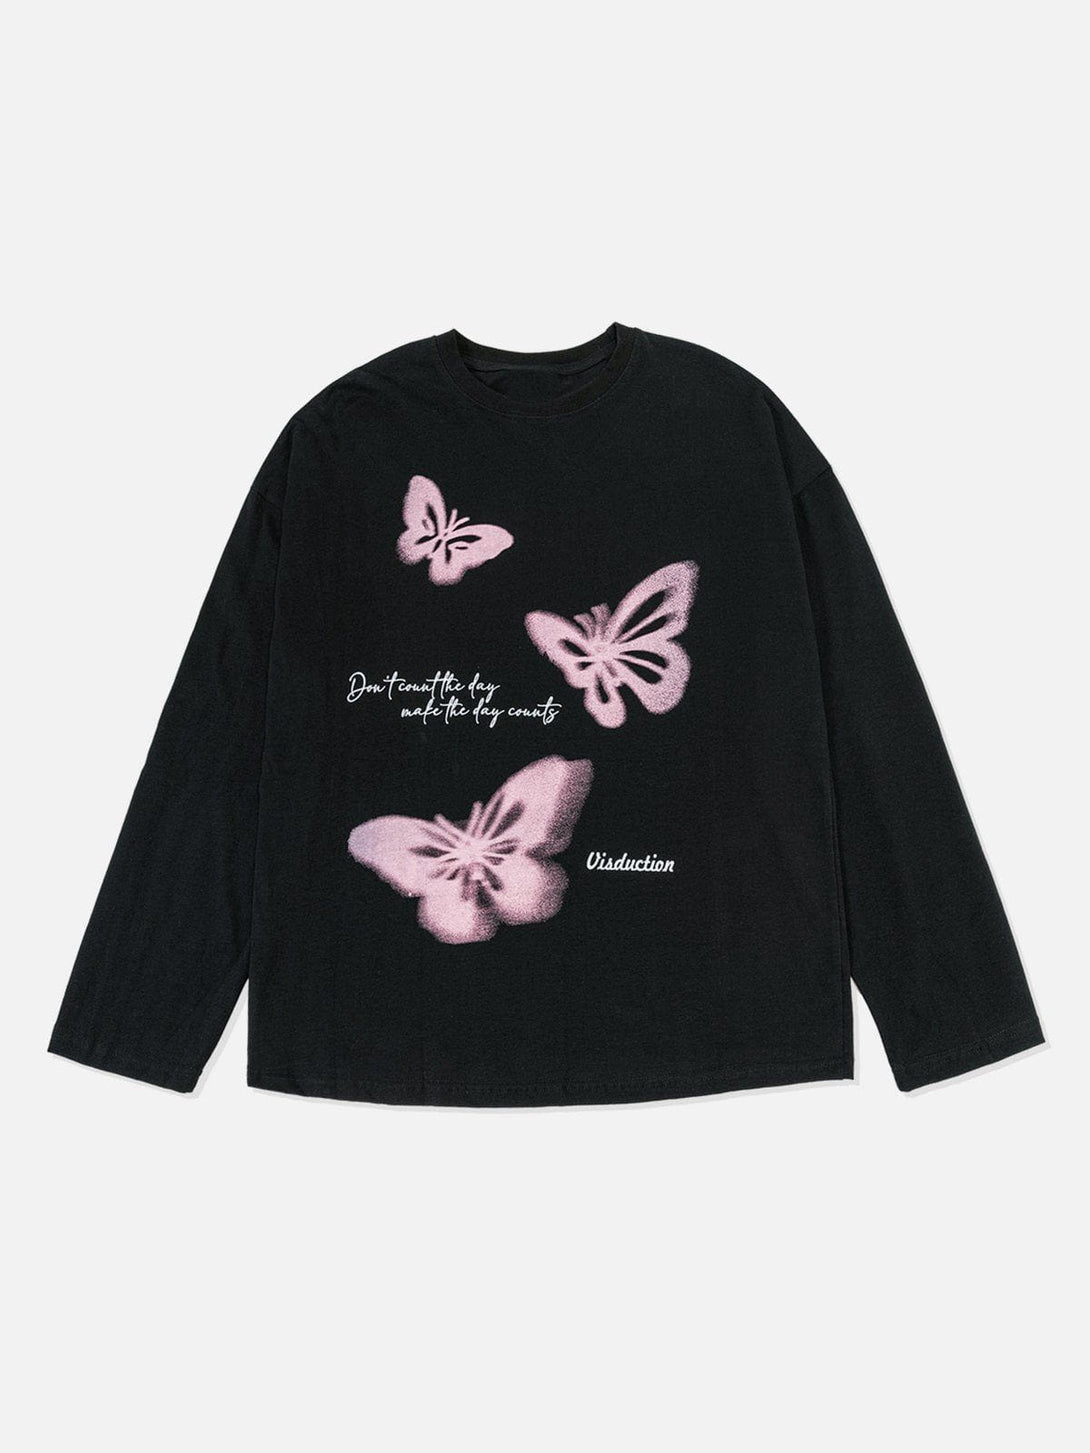 Majesda® - Vintage Butterfly Print Sweatshirt outfit ideas streetwear fashion